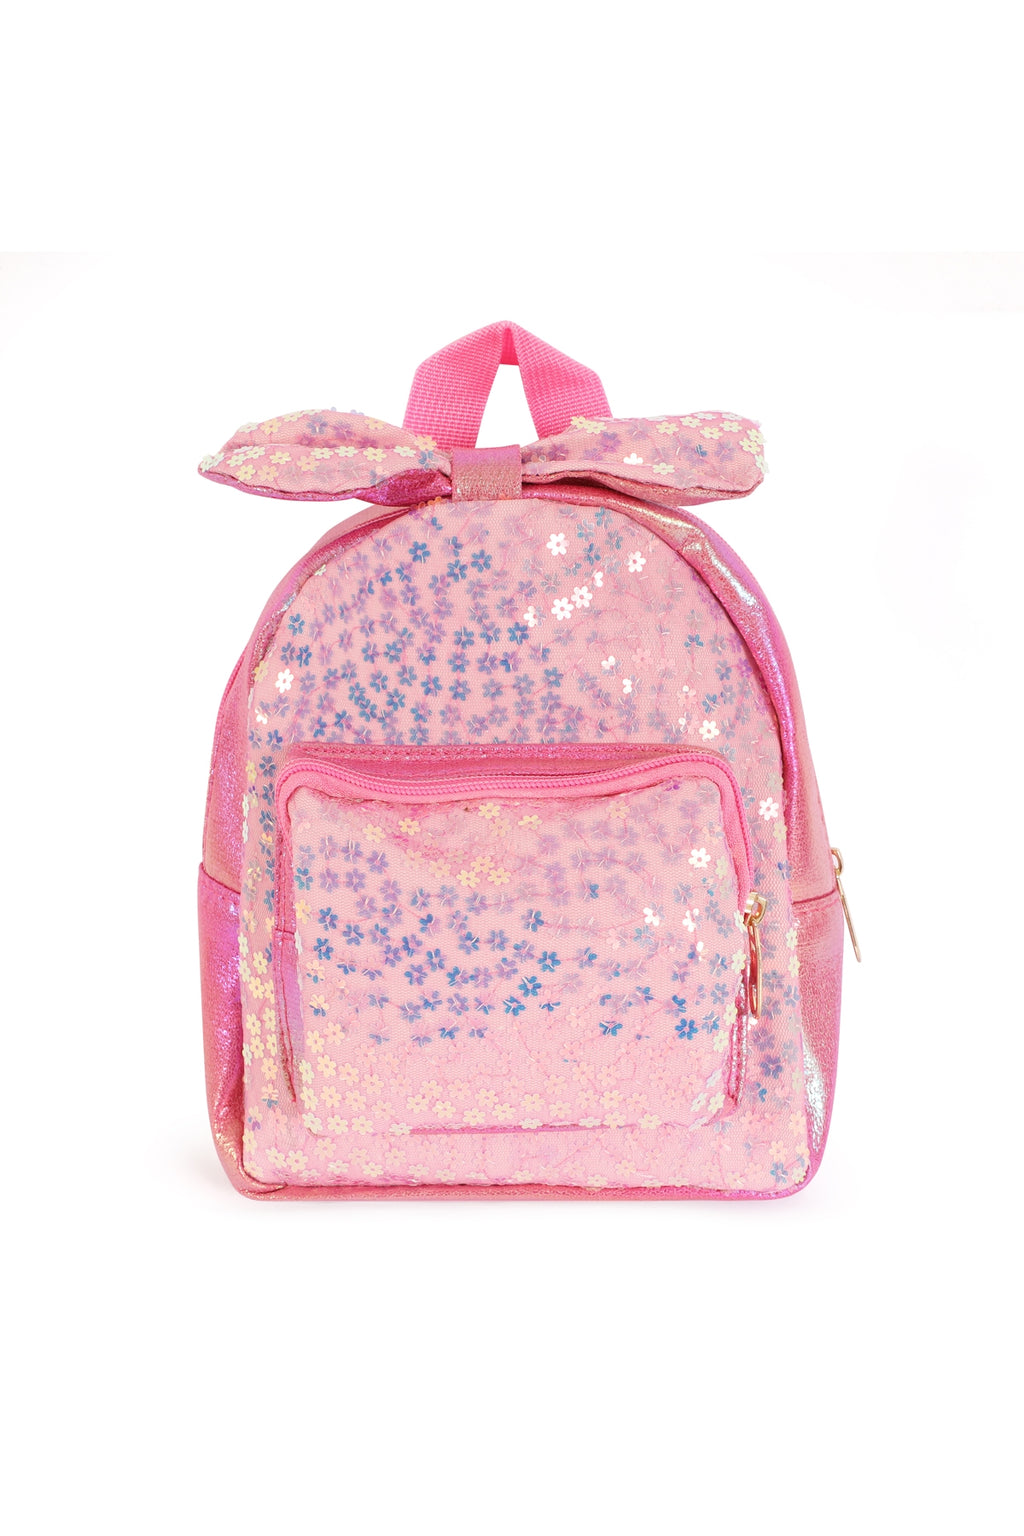 Cute Bow Glitter Kids Backpack Rose - Pack of 6